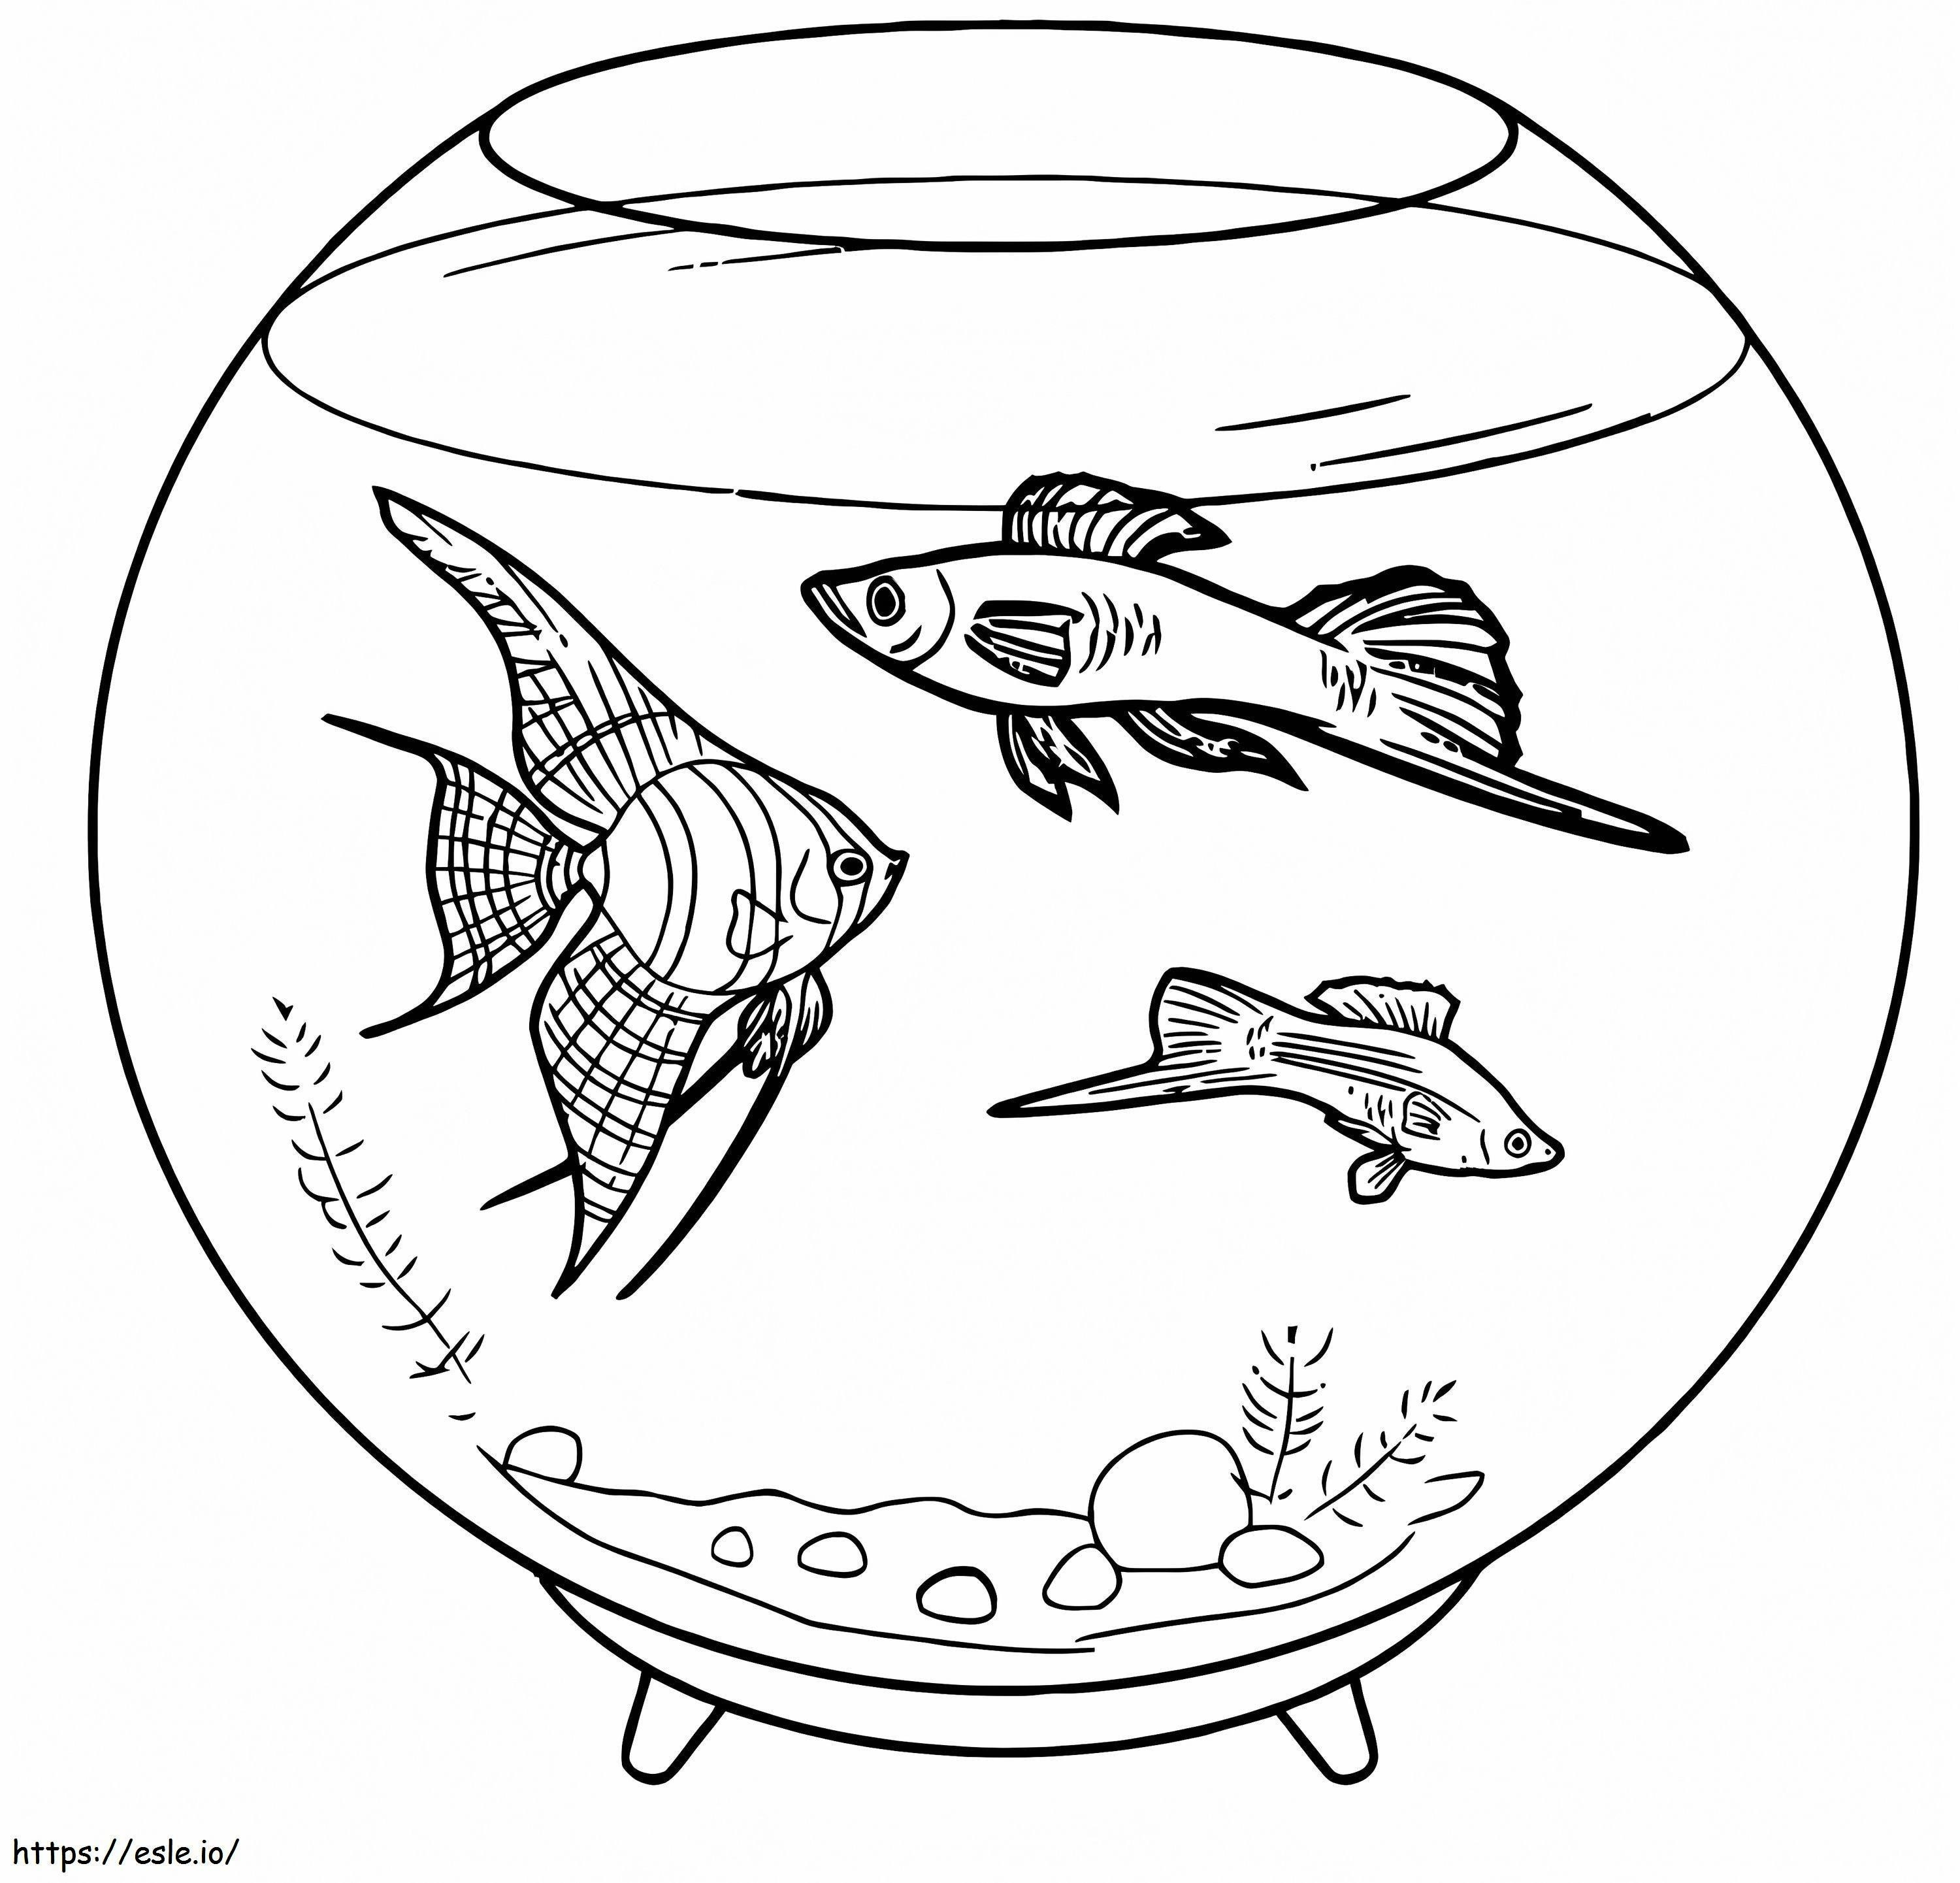 Fish Tank coloring page